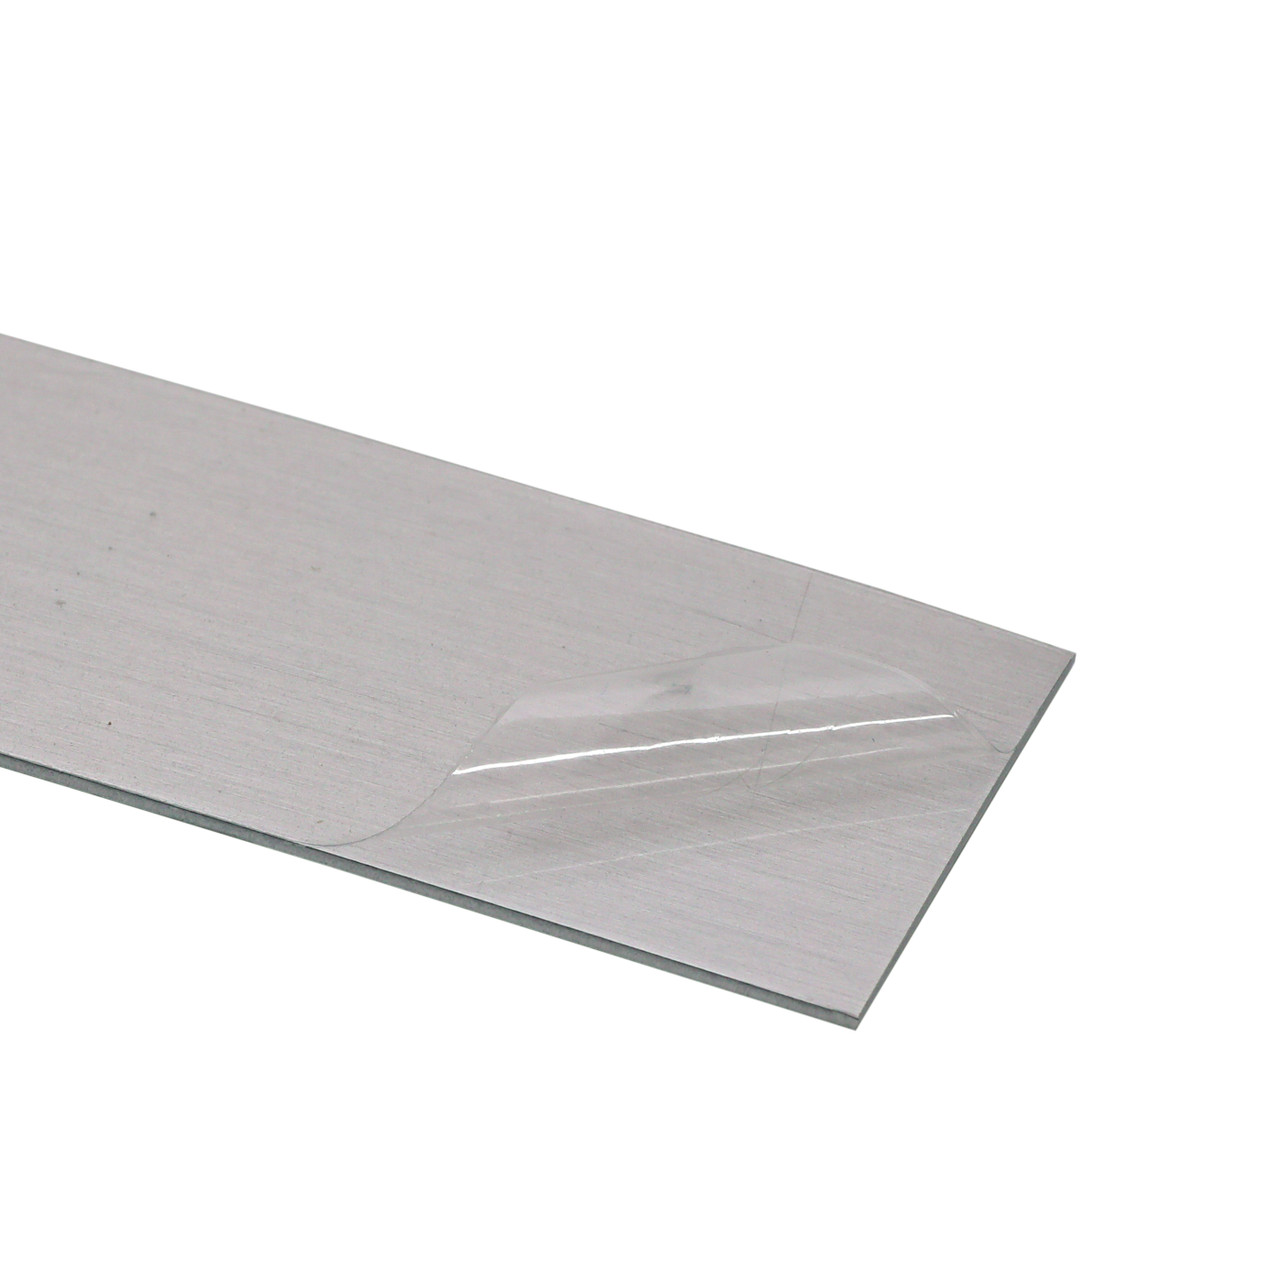 Anodized Aluminum Blank Plate  Black Anodized Aluminum Sheet